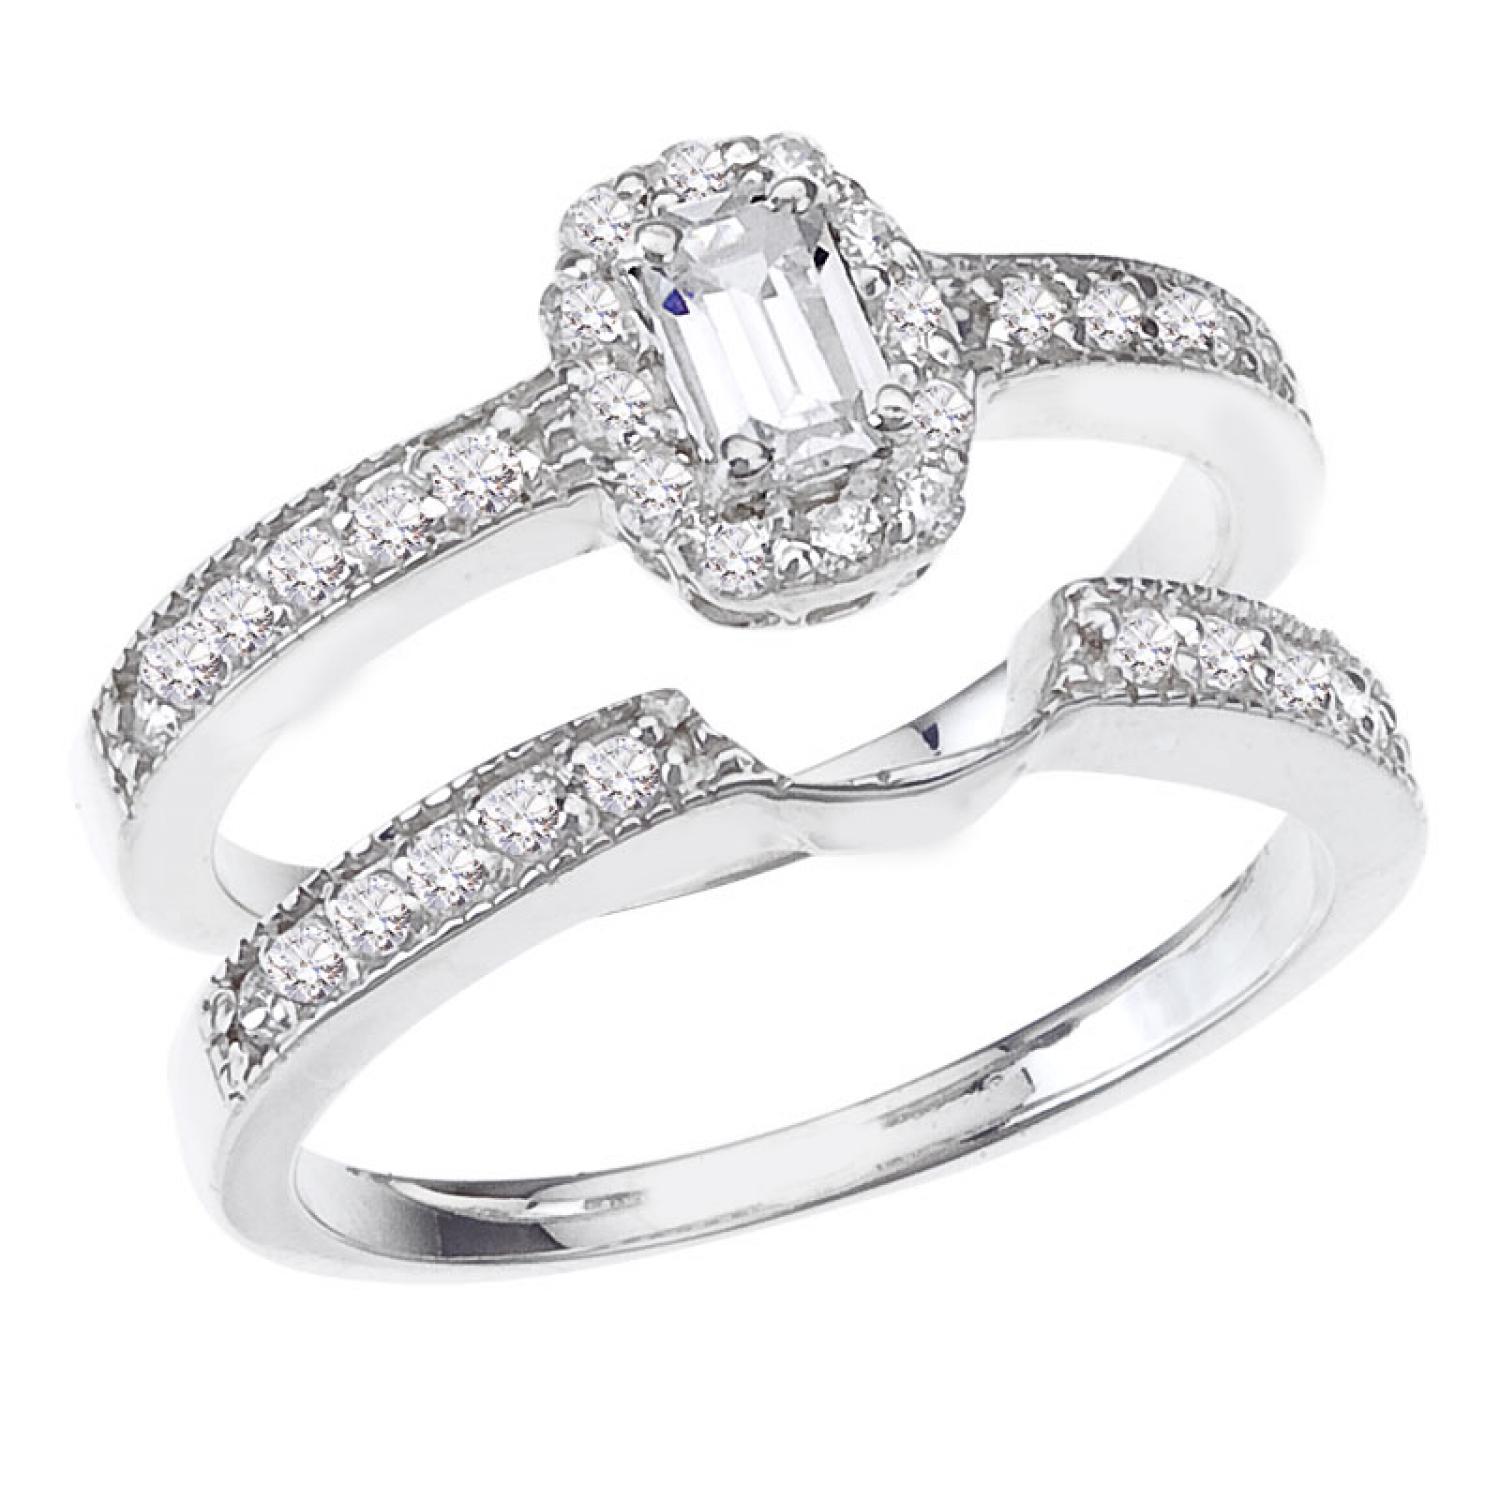 14K White Gold Qpid .73 Ct Emerald Cut Diamond Bridal Ring Set